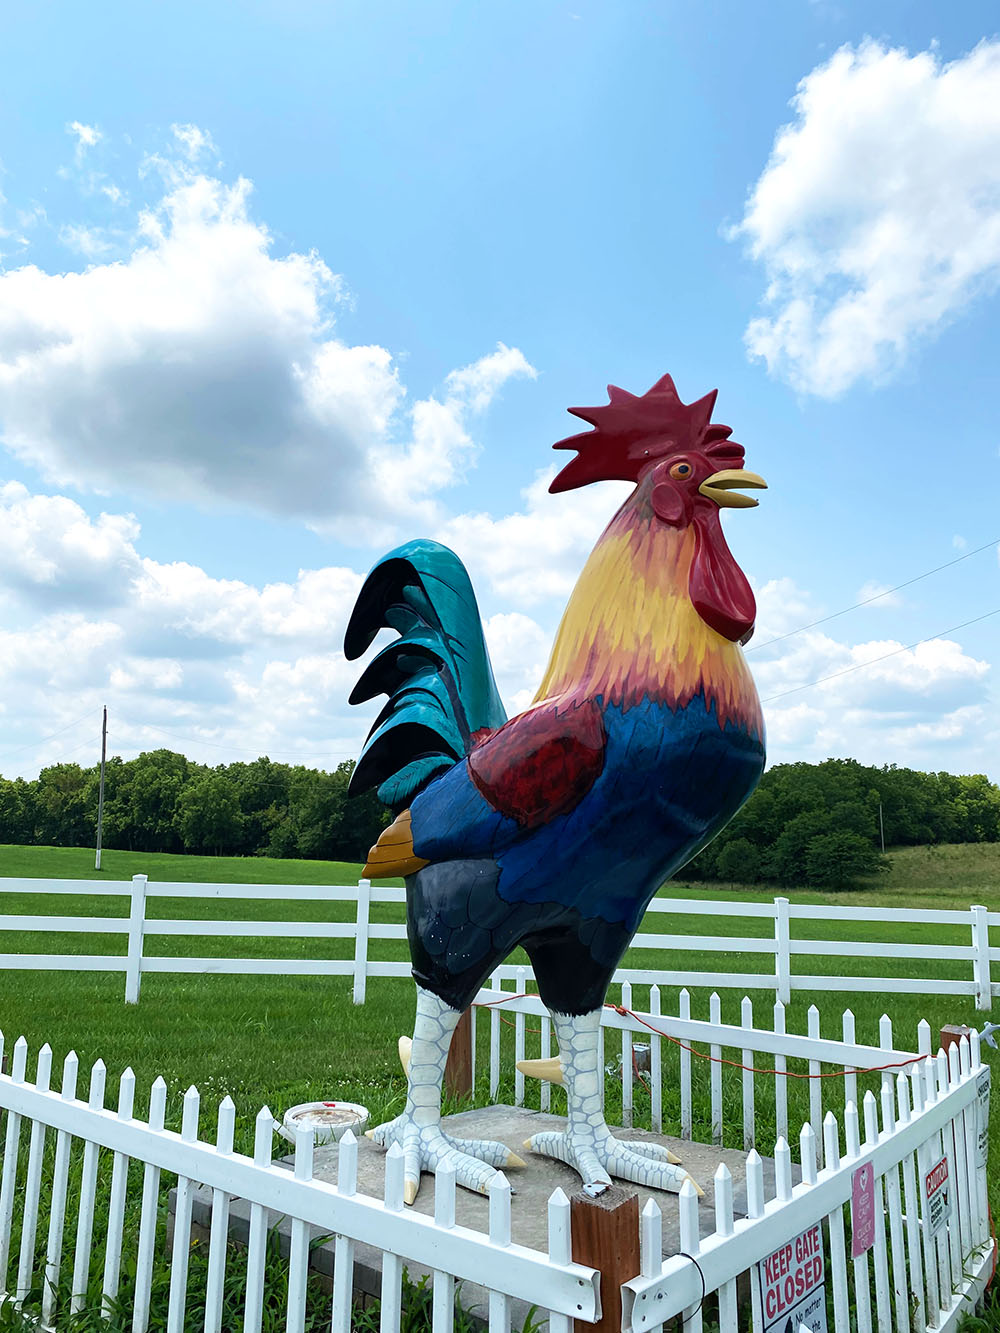 Fiberglass chicken statue named Chick Norris near Gardner, Kansas